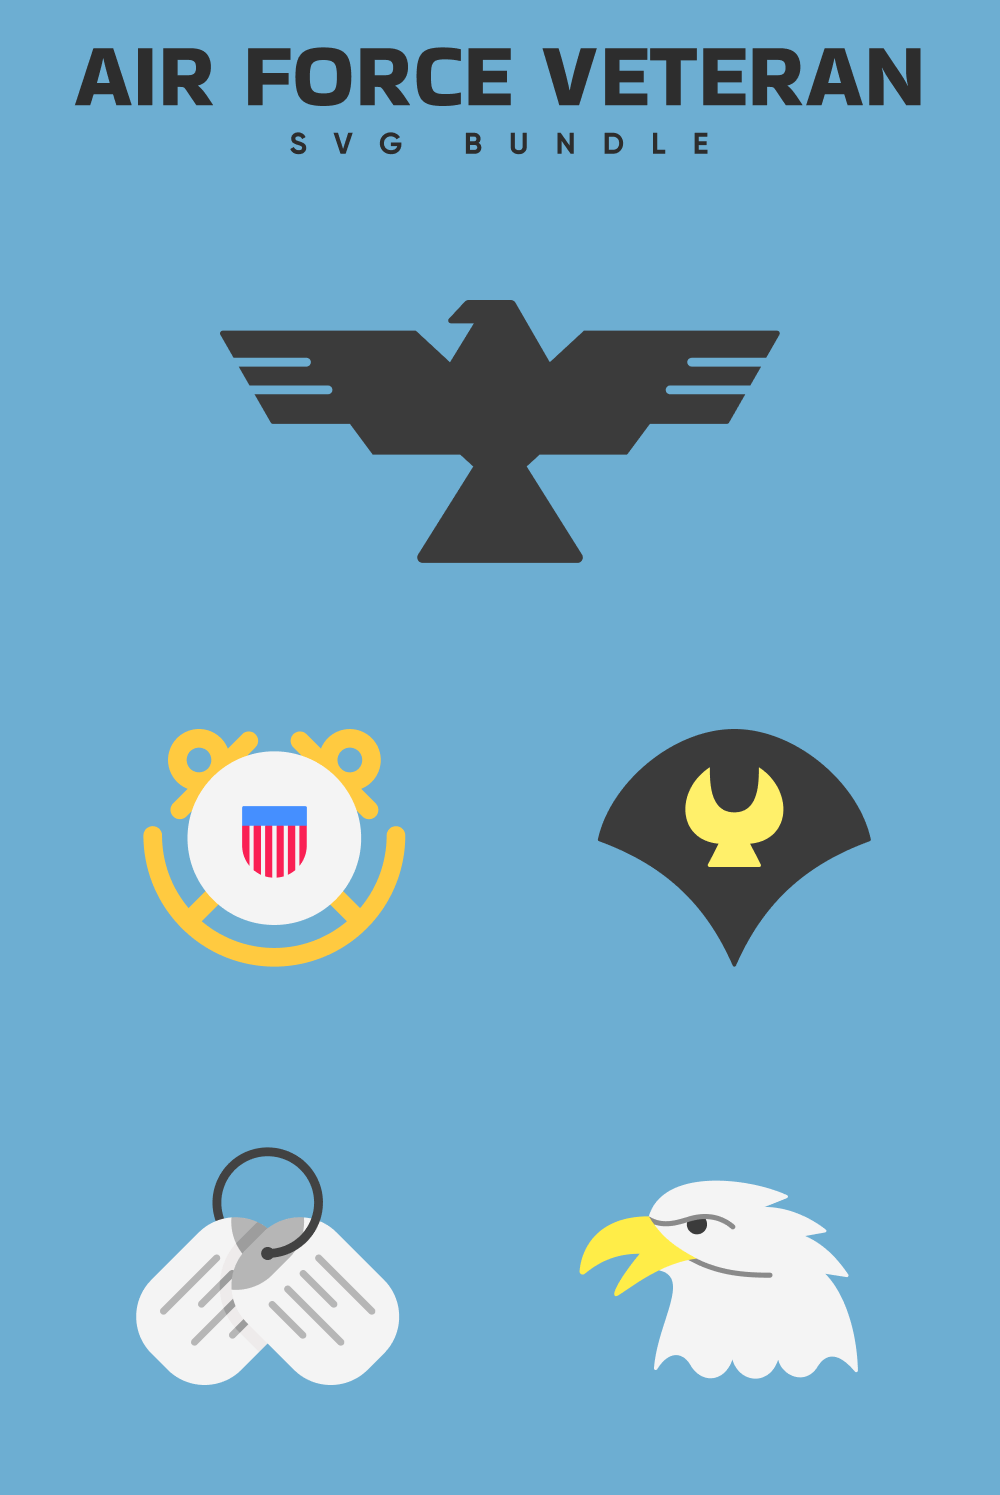 Air Force Veteran SVG symbols on blue background.